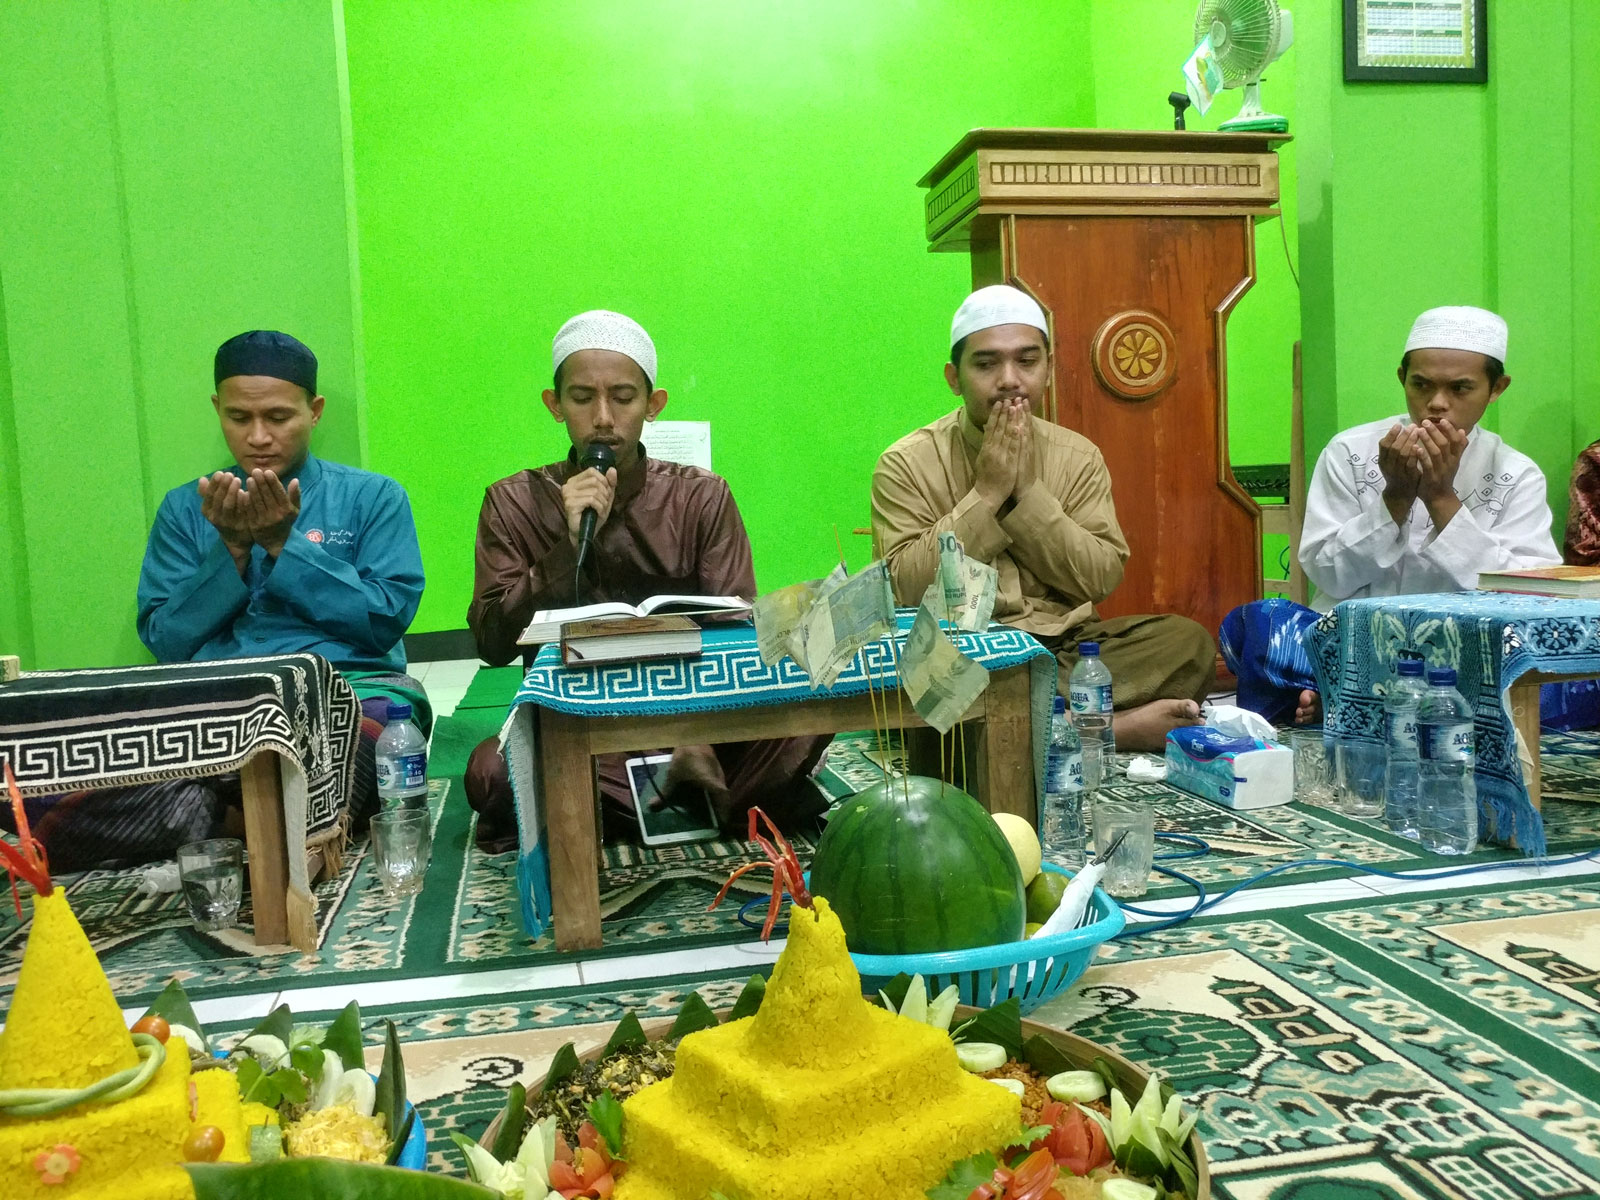 MP3 Rekaman Khataman Qur'an bersama Ustadz Zidan Baslum dan Ustadz Ali Assegaf di Masjid Ar-Rahman Pucung, Eromoko, Wonogiri 2019